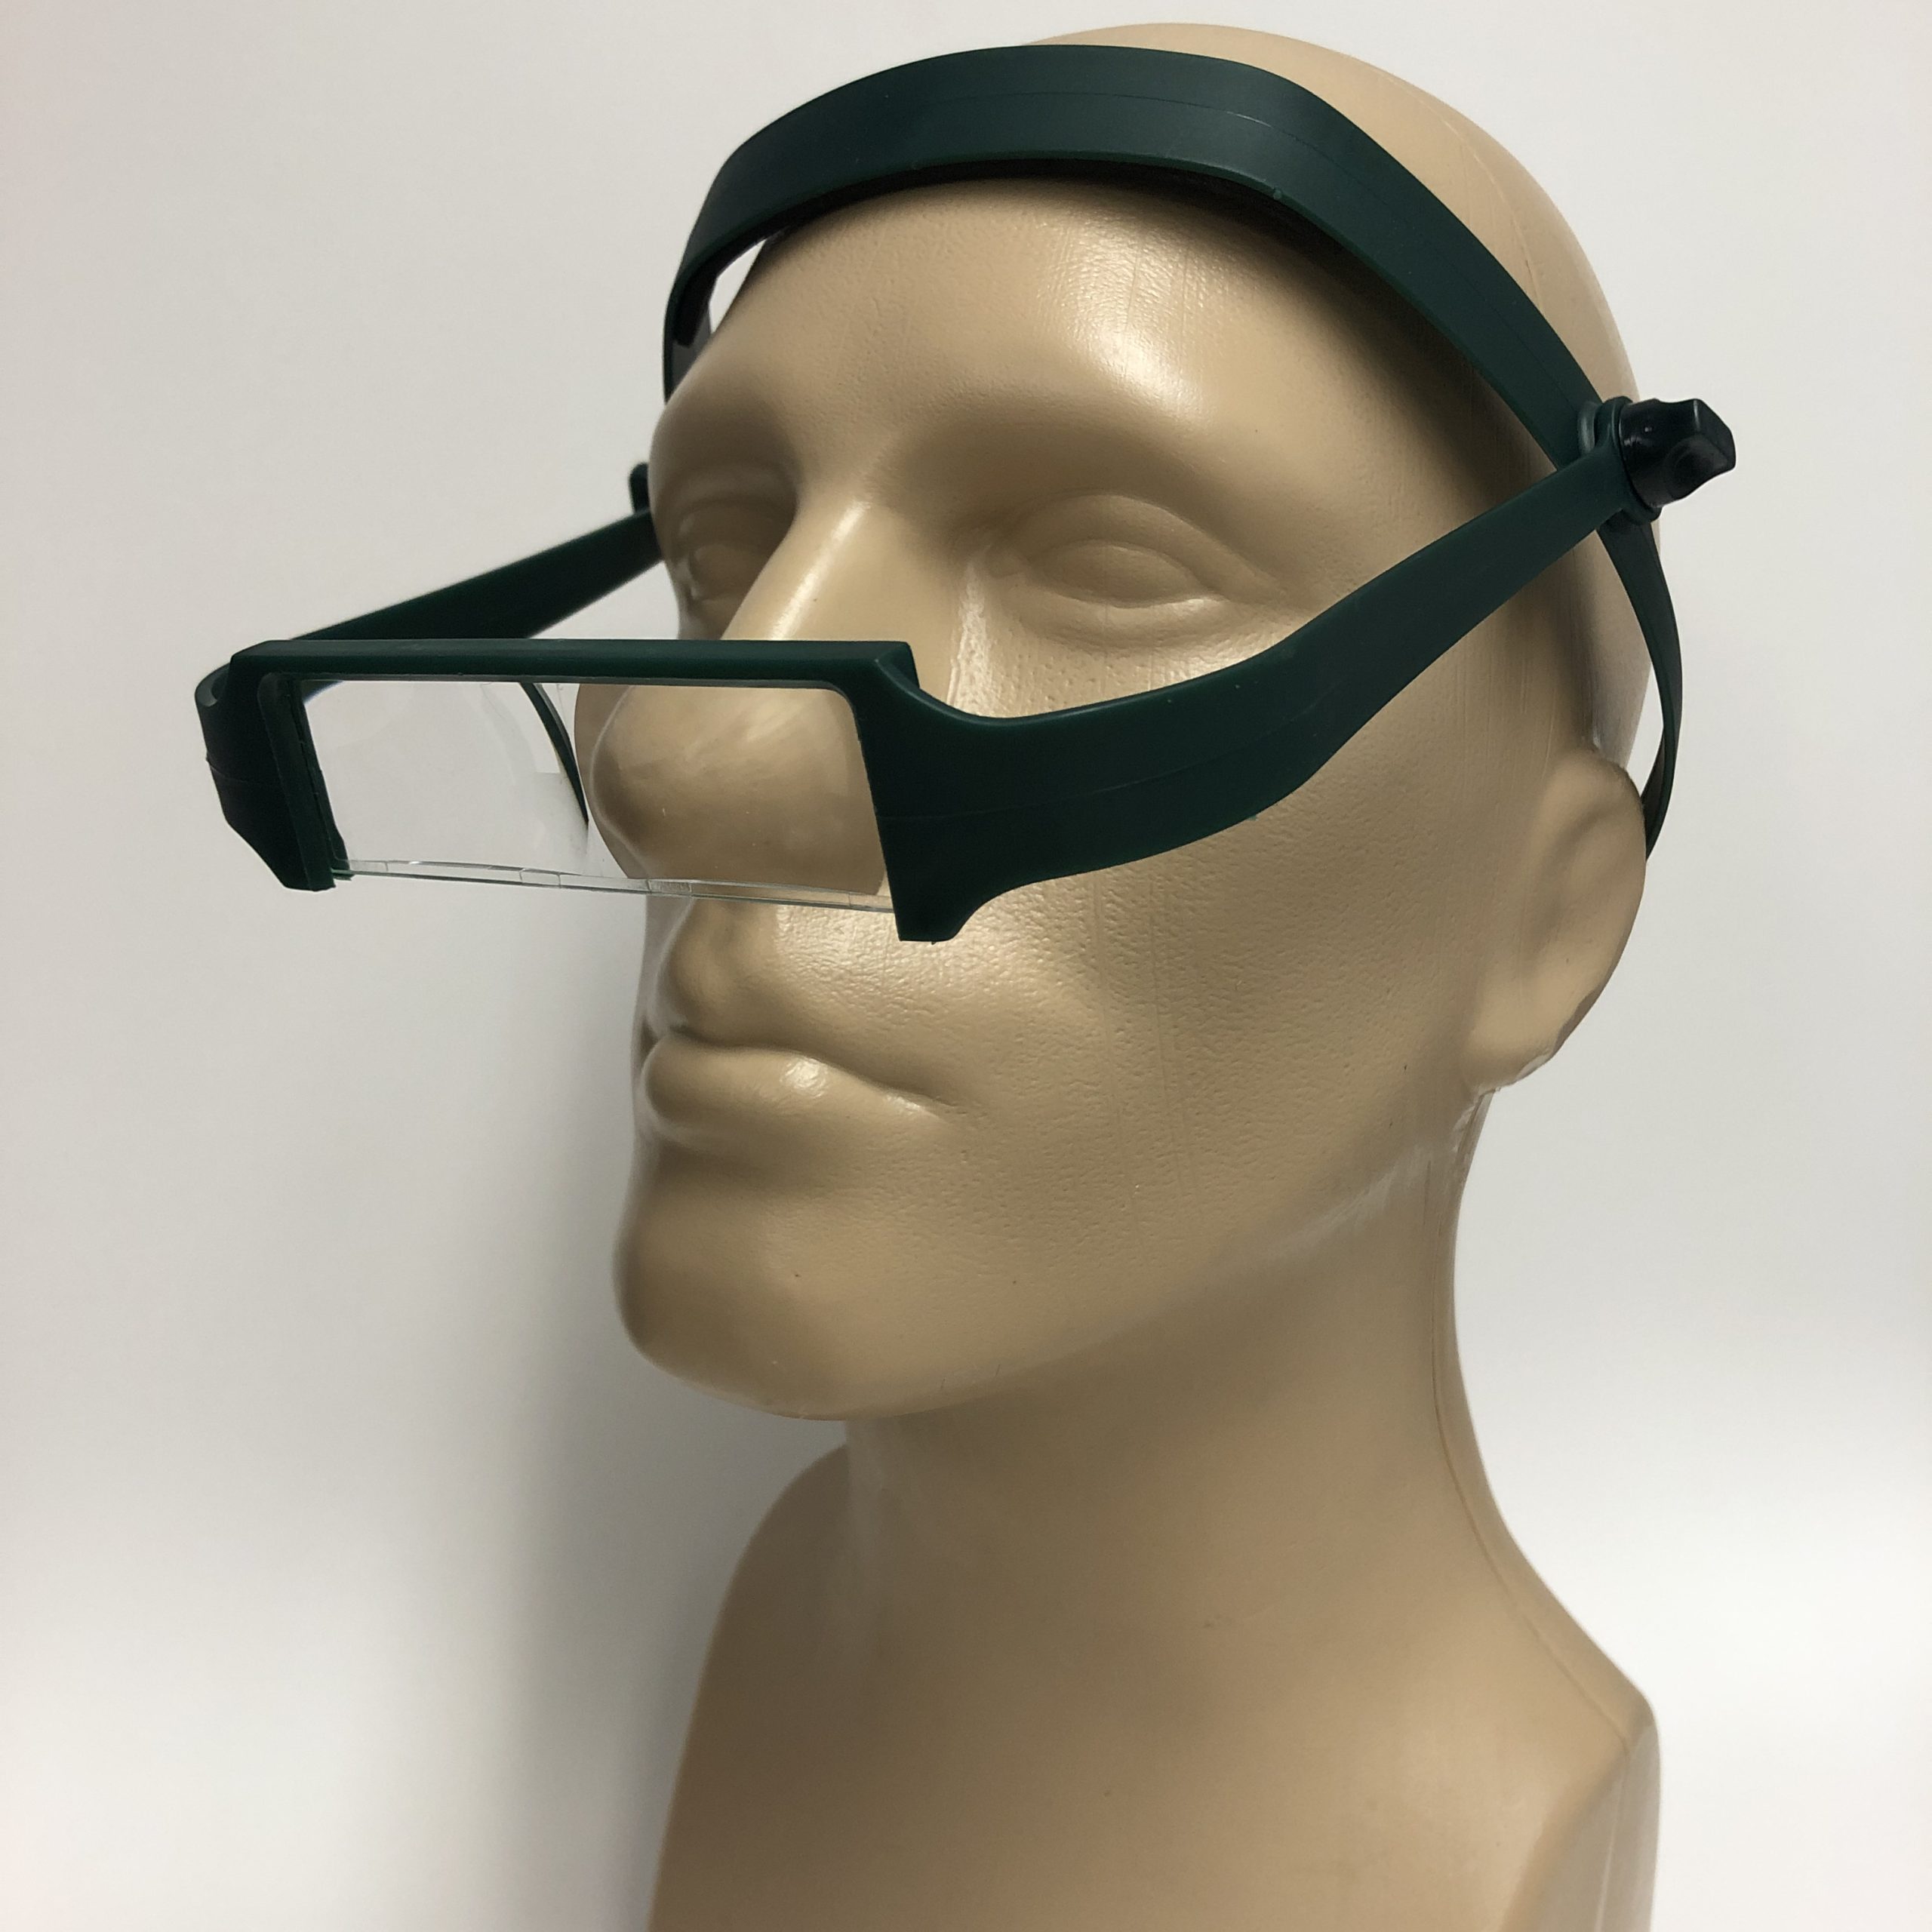 gunsmithing ultra lightweight headband magnifier olive drab green side view